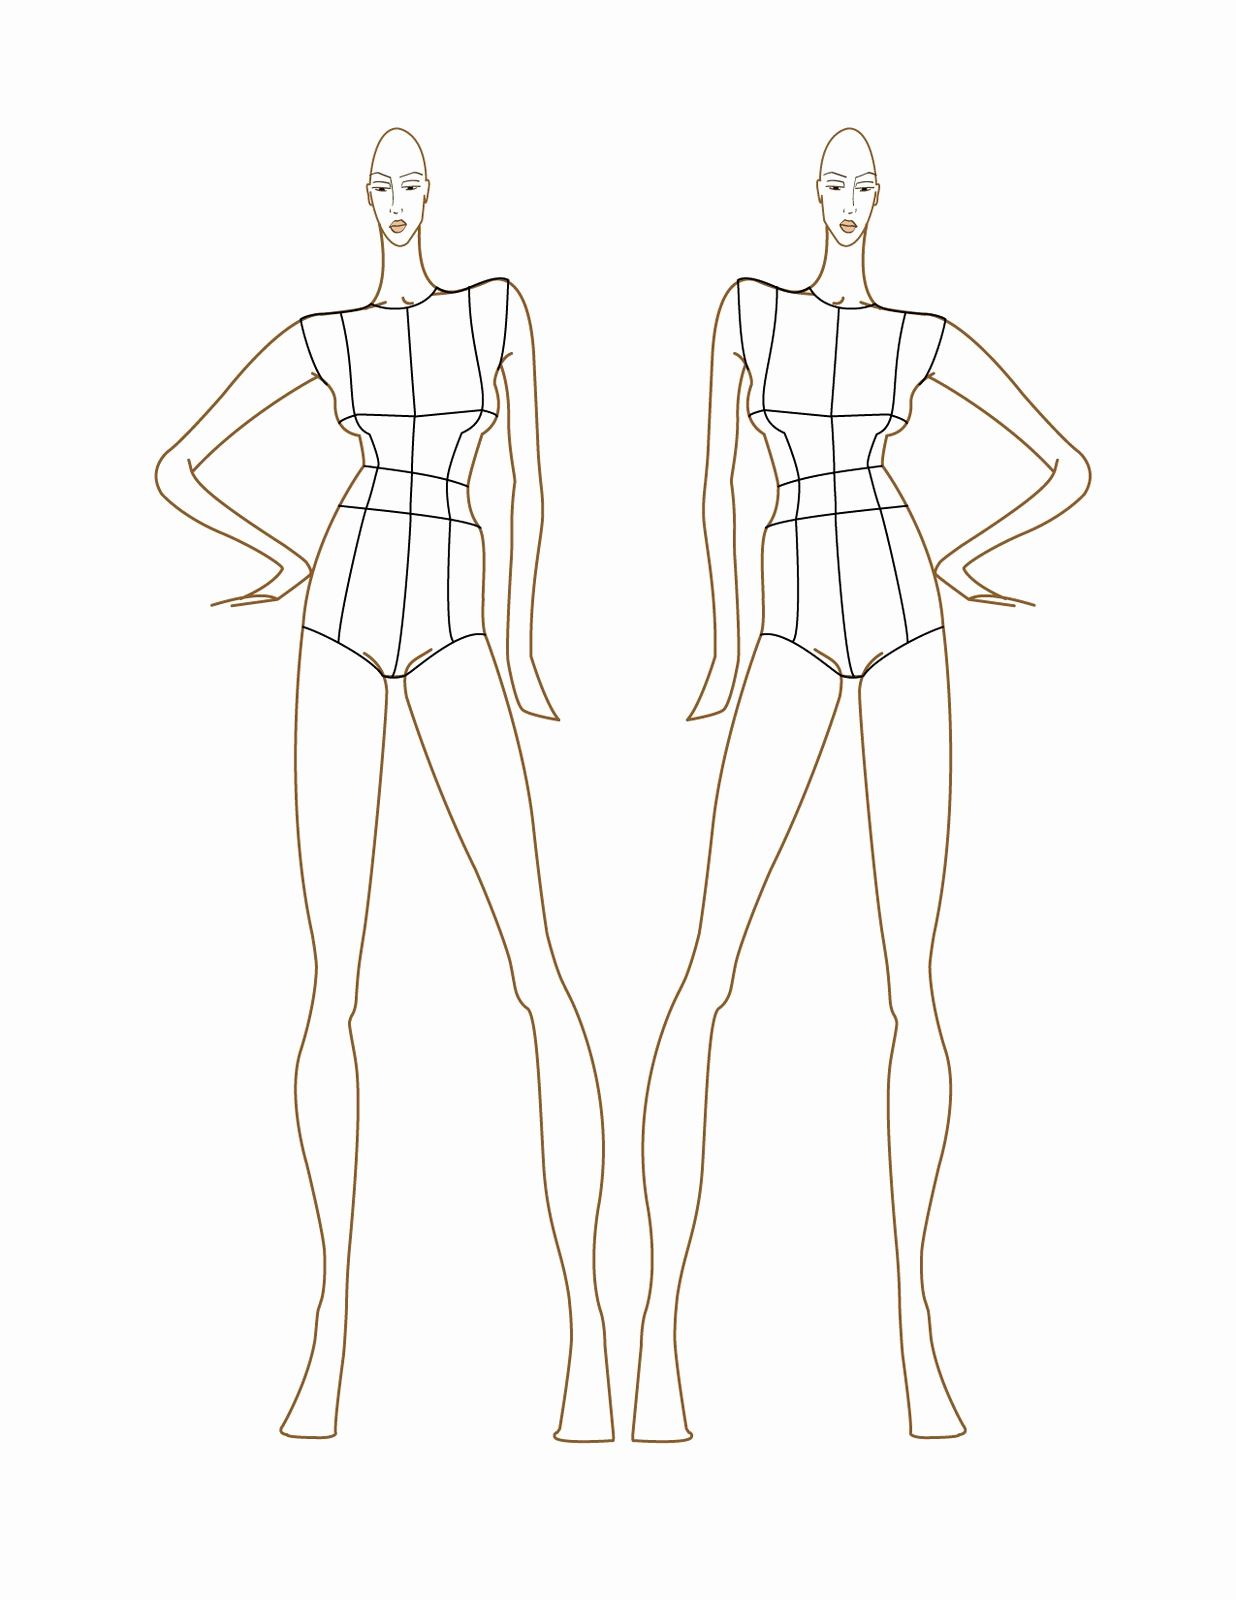 Body Template for Fashion Design Elegant 13 Clothing Design Templates for Men Fashion